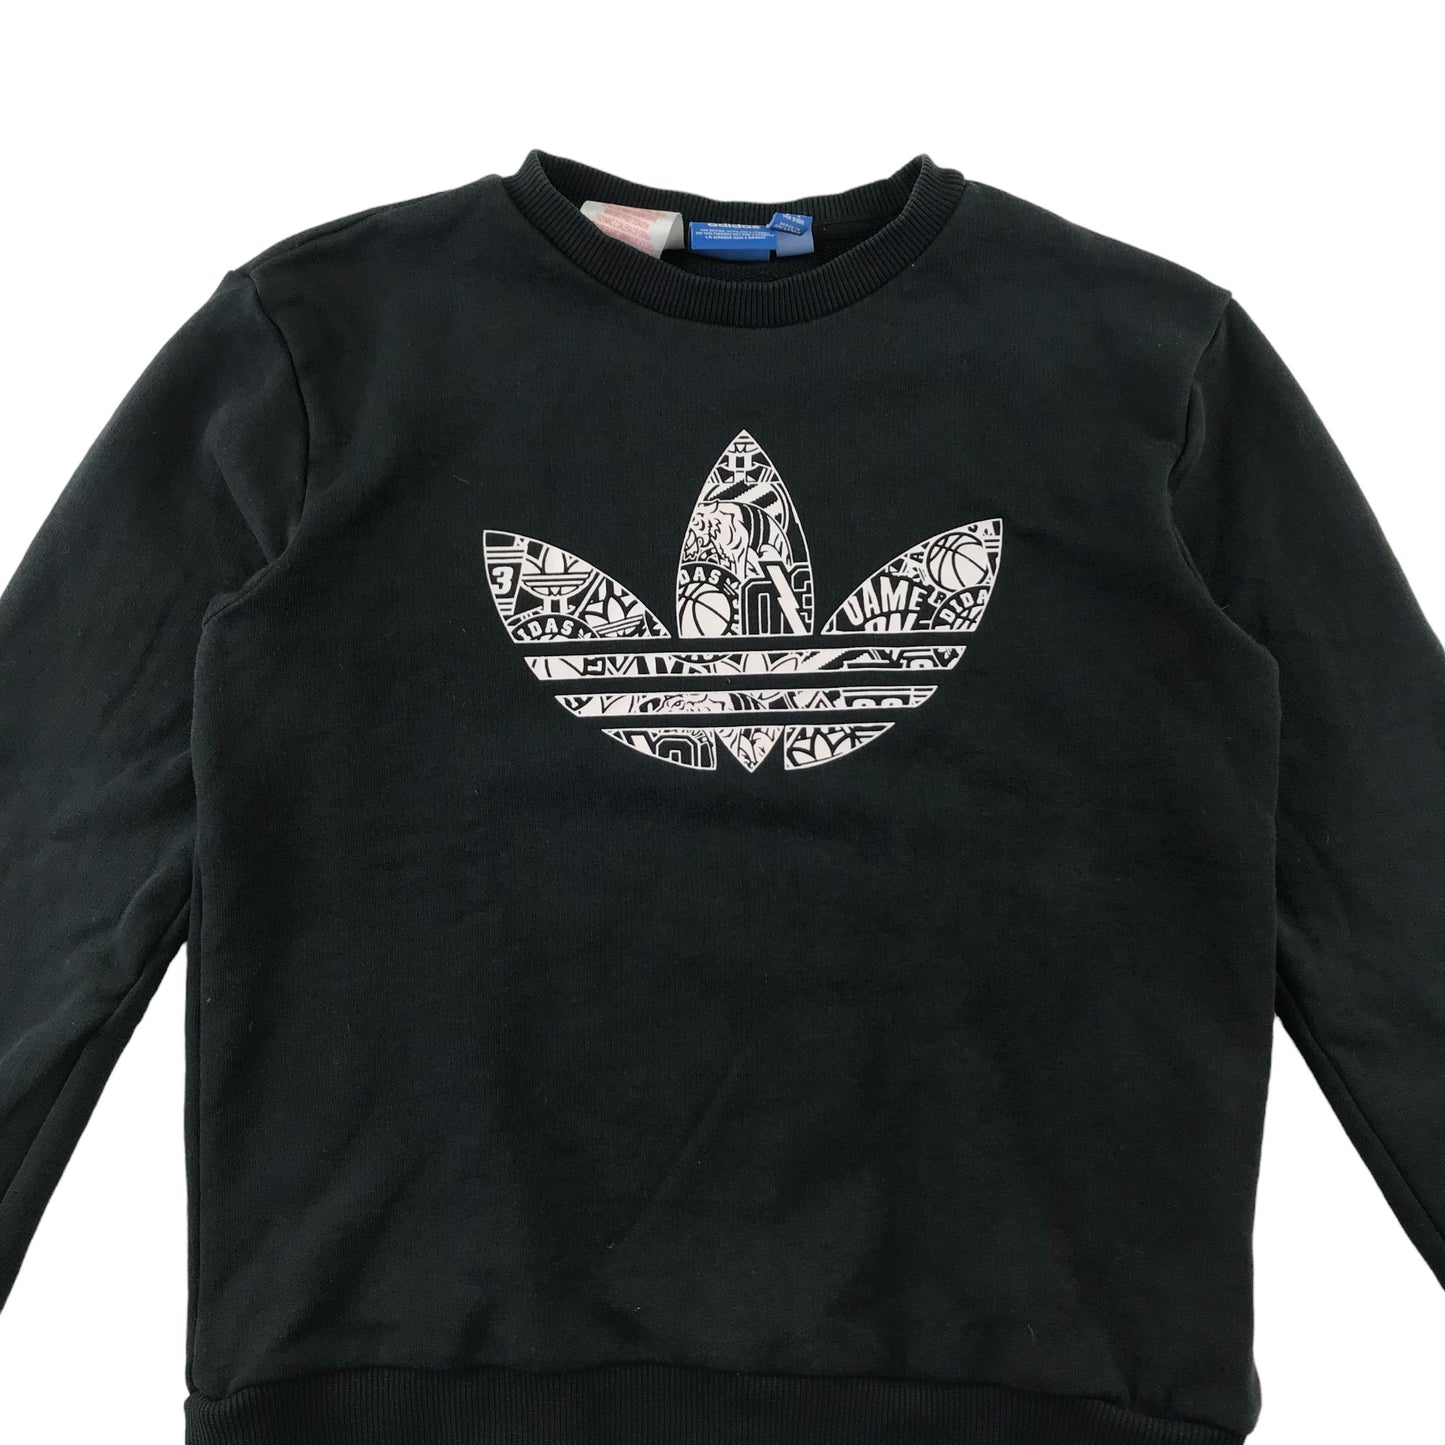 Adidas sweater 9-10 years black big Adidas logo graphic print